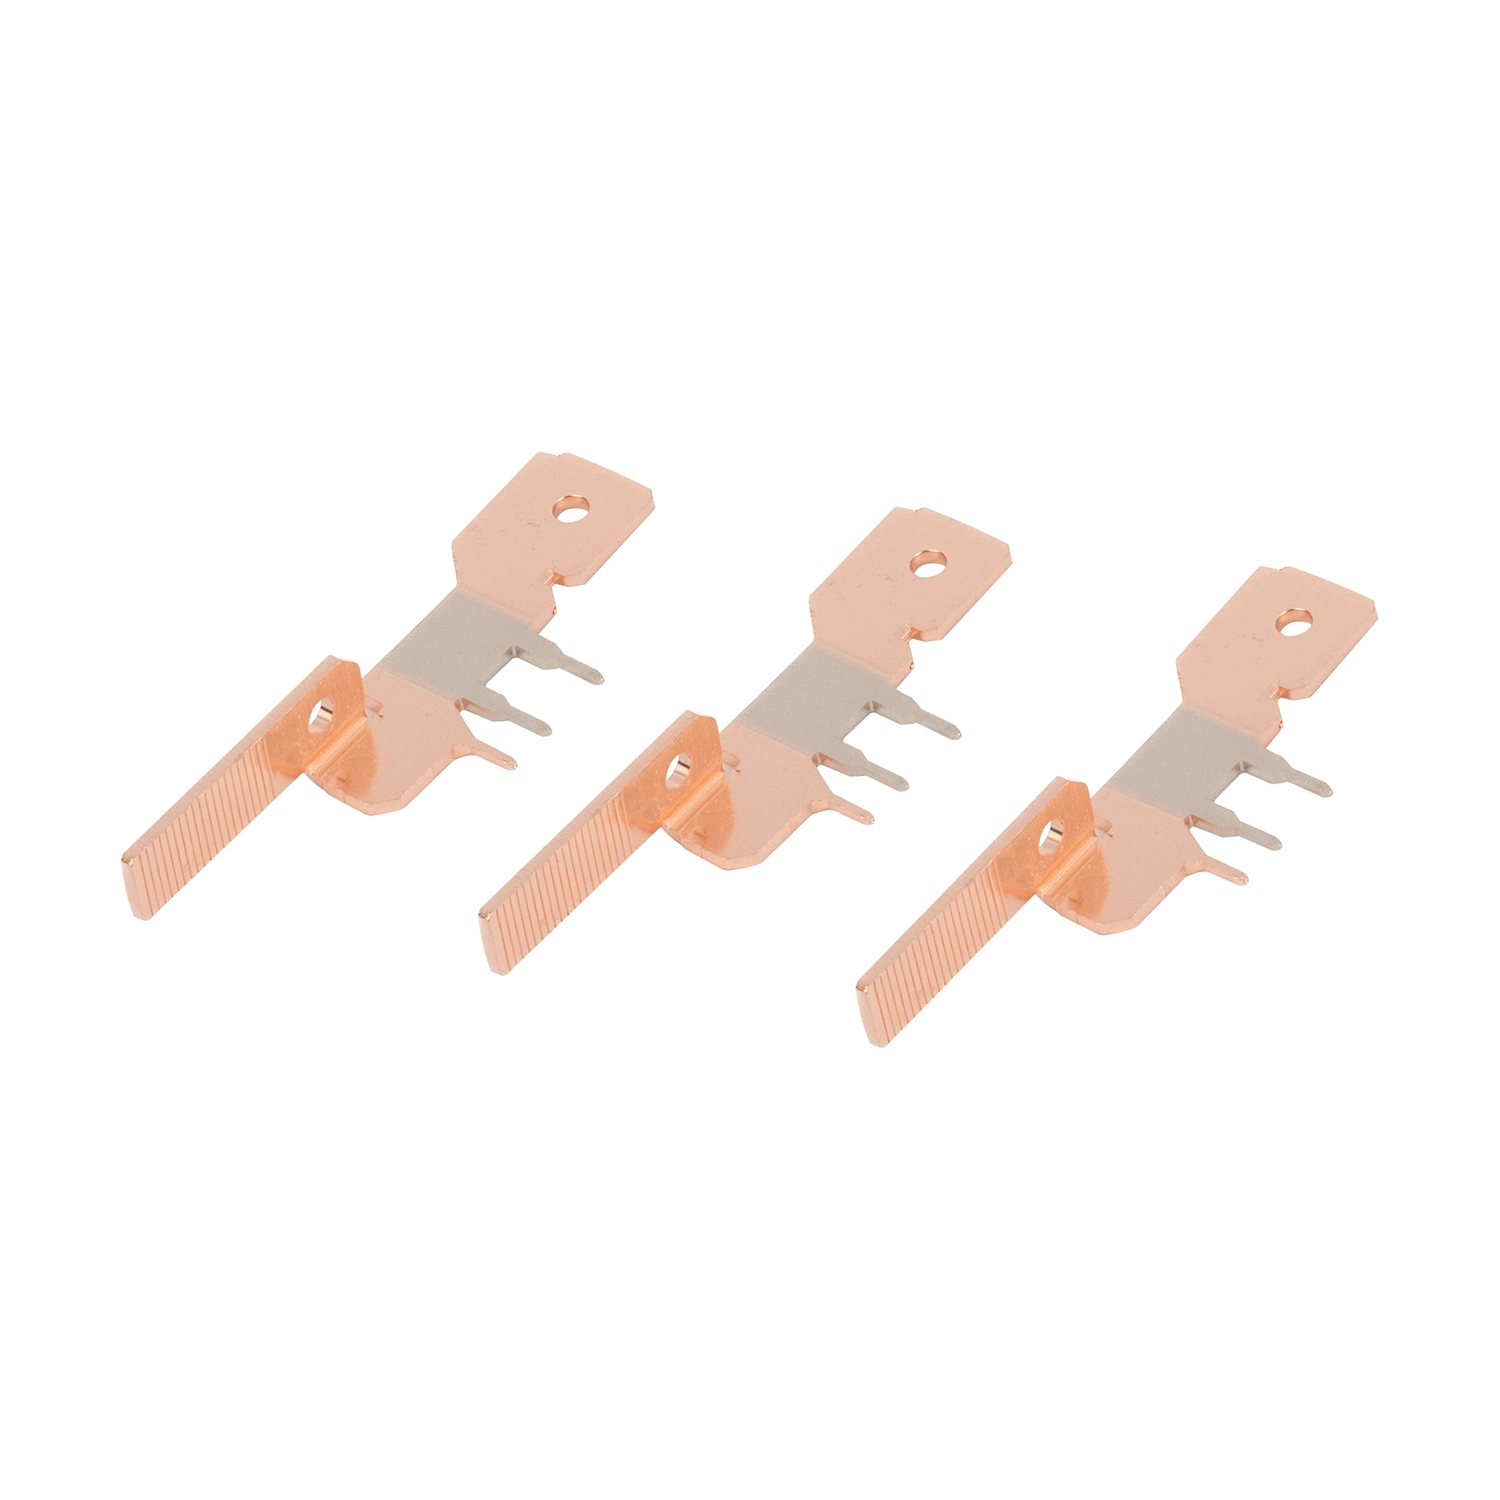 Metal Stamping Manganese Copper Static Spring Solder Lug Plug Terminal Connector Electrical Parts